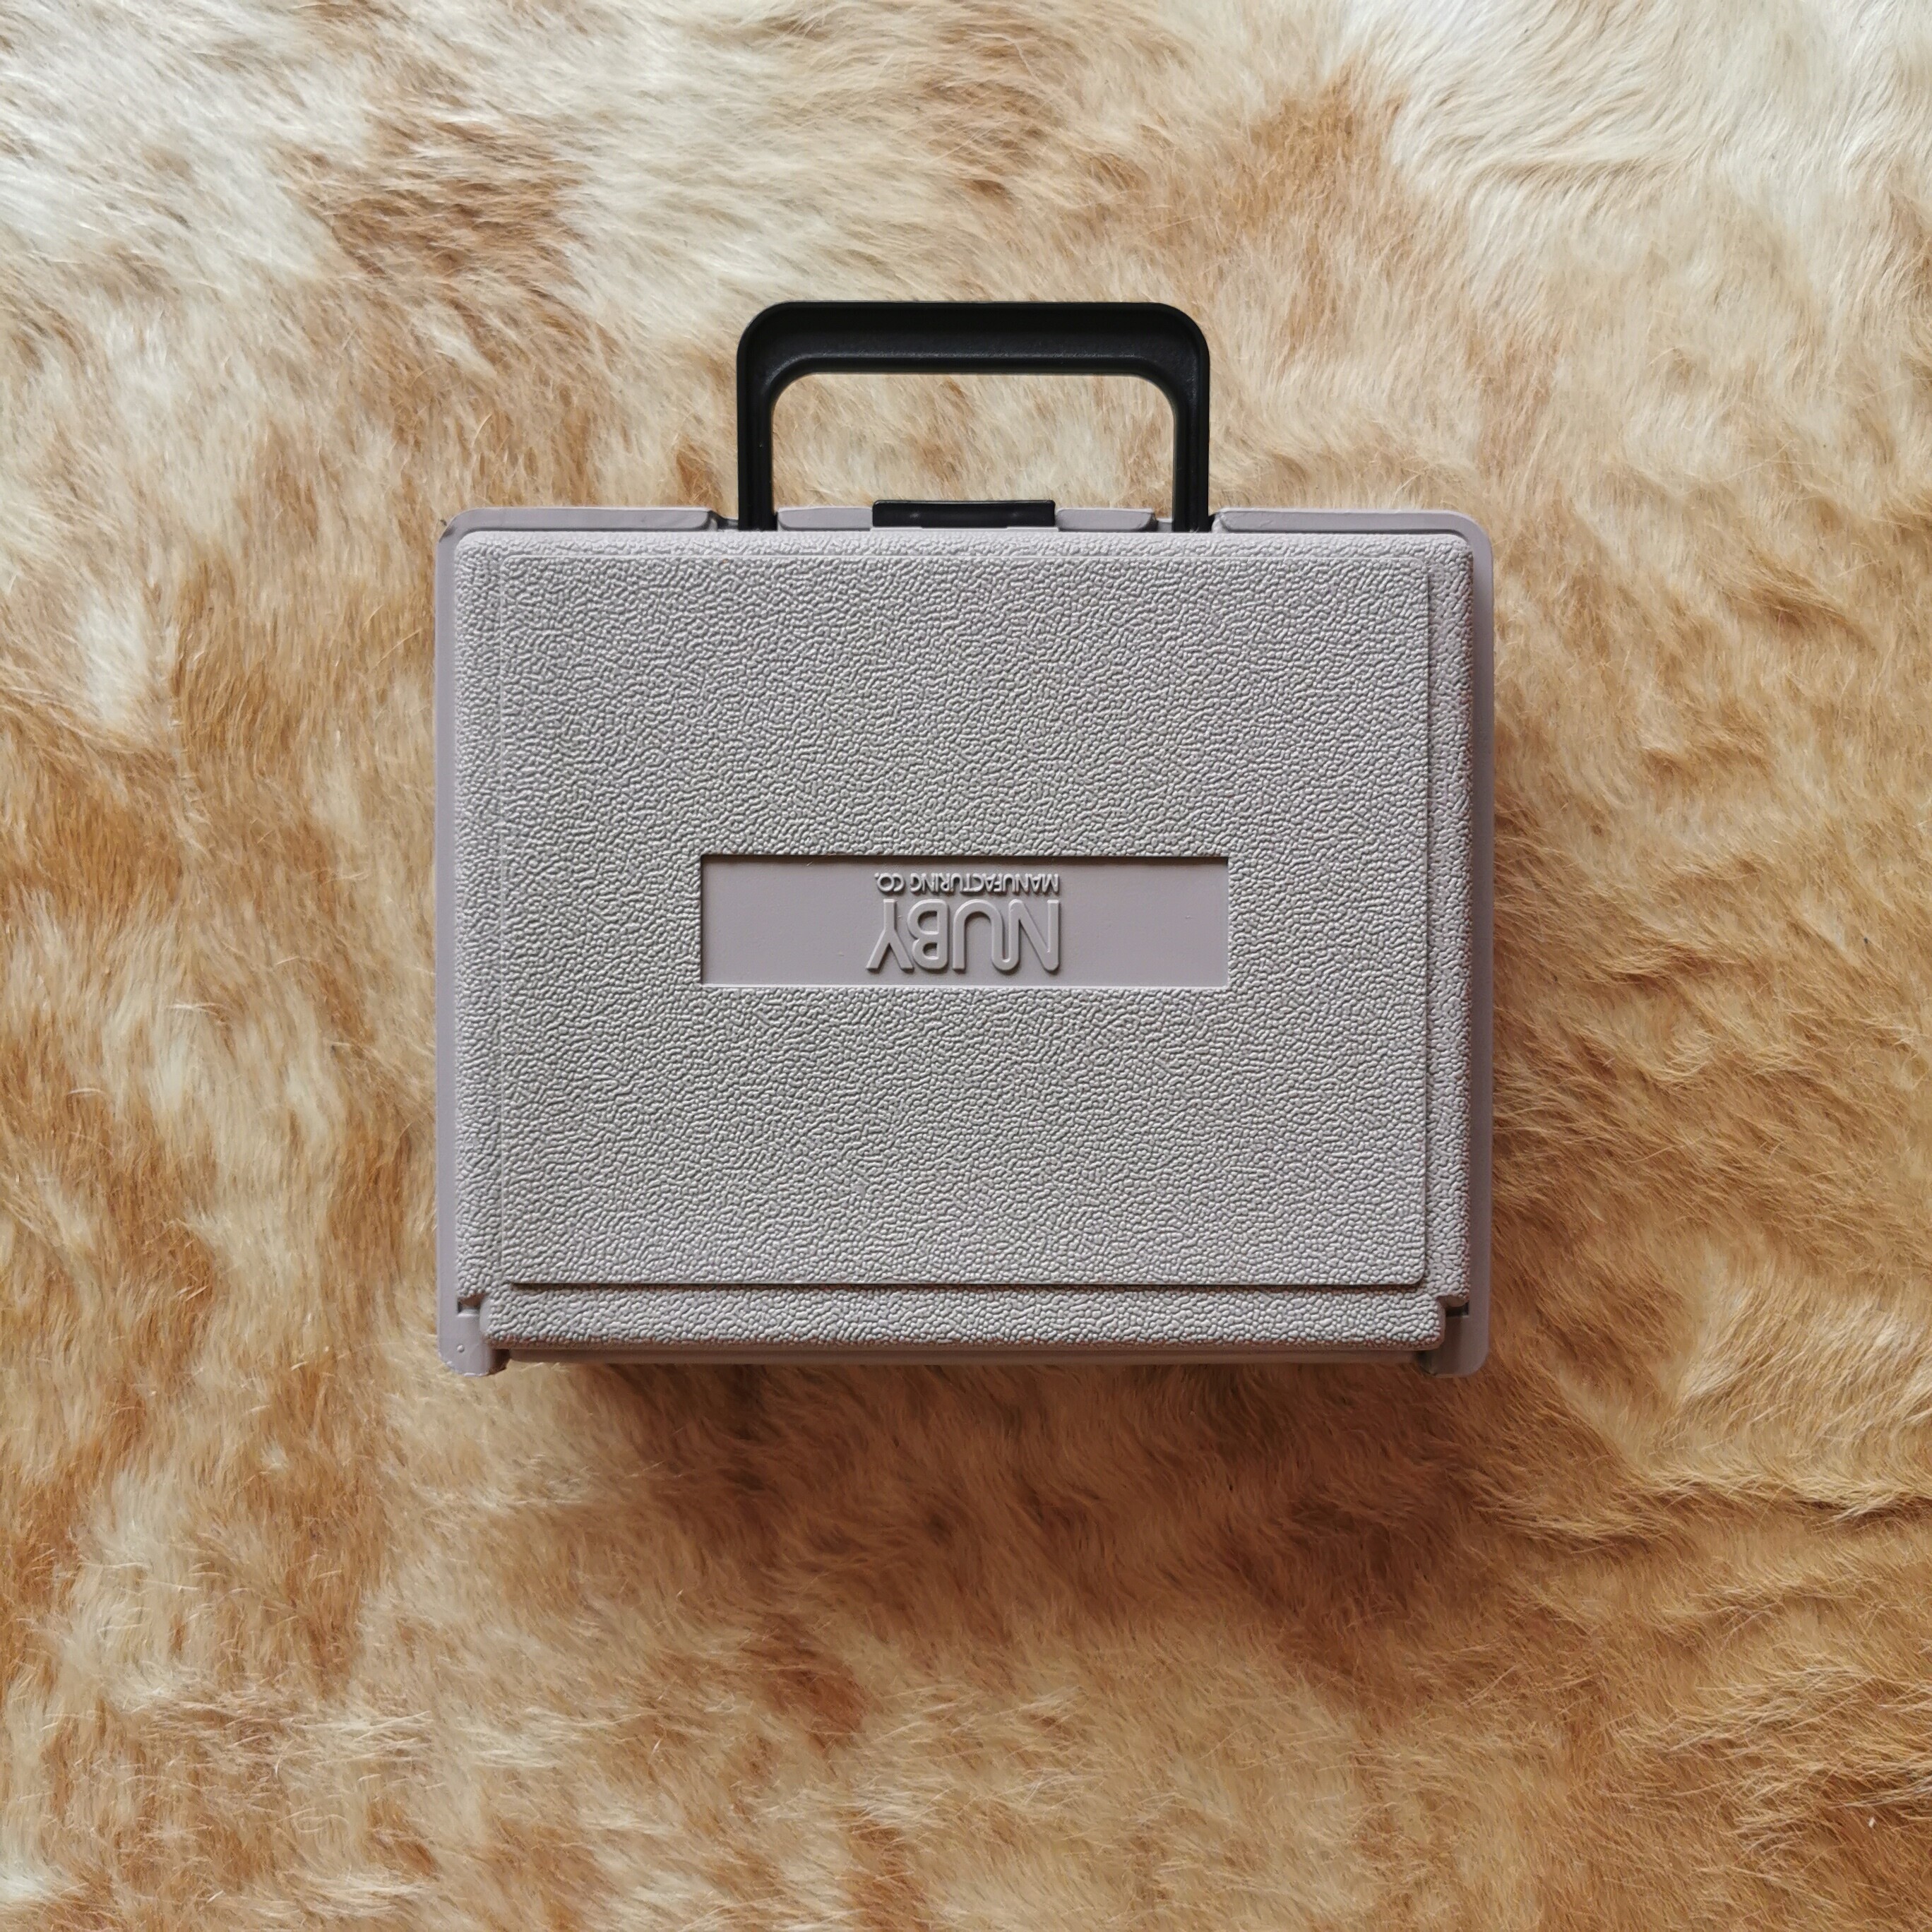  Nuby Game Boy Carry Case